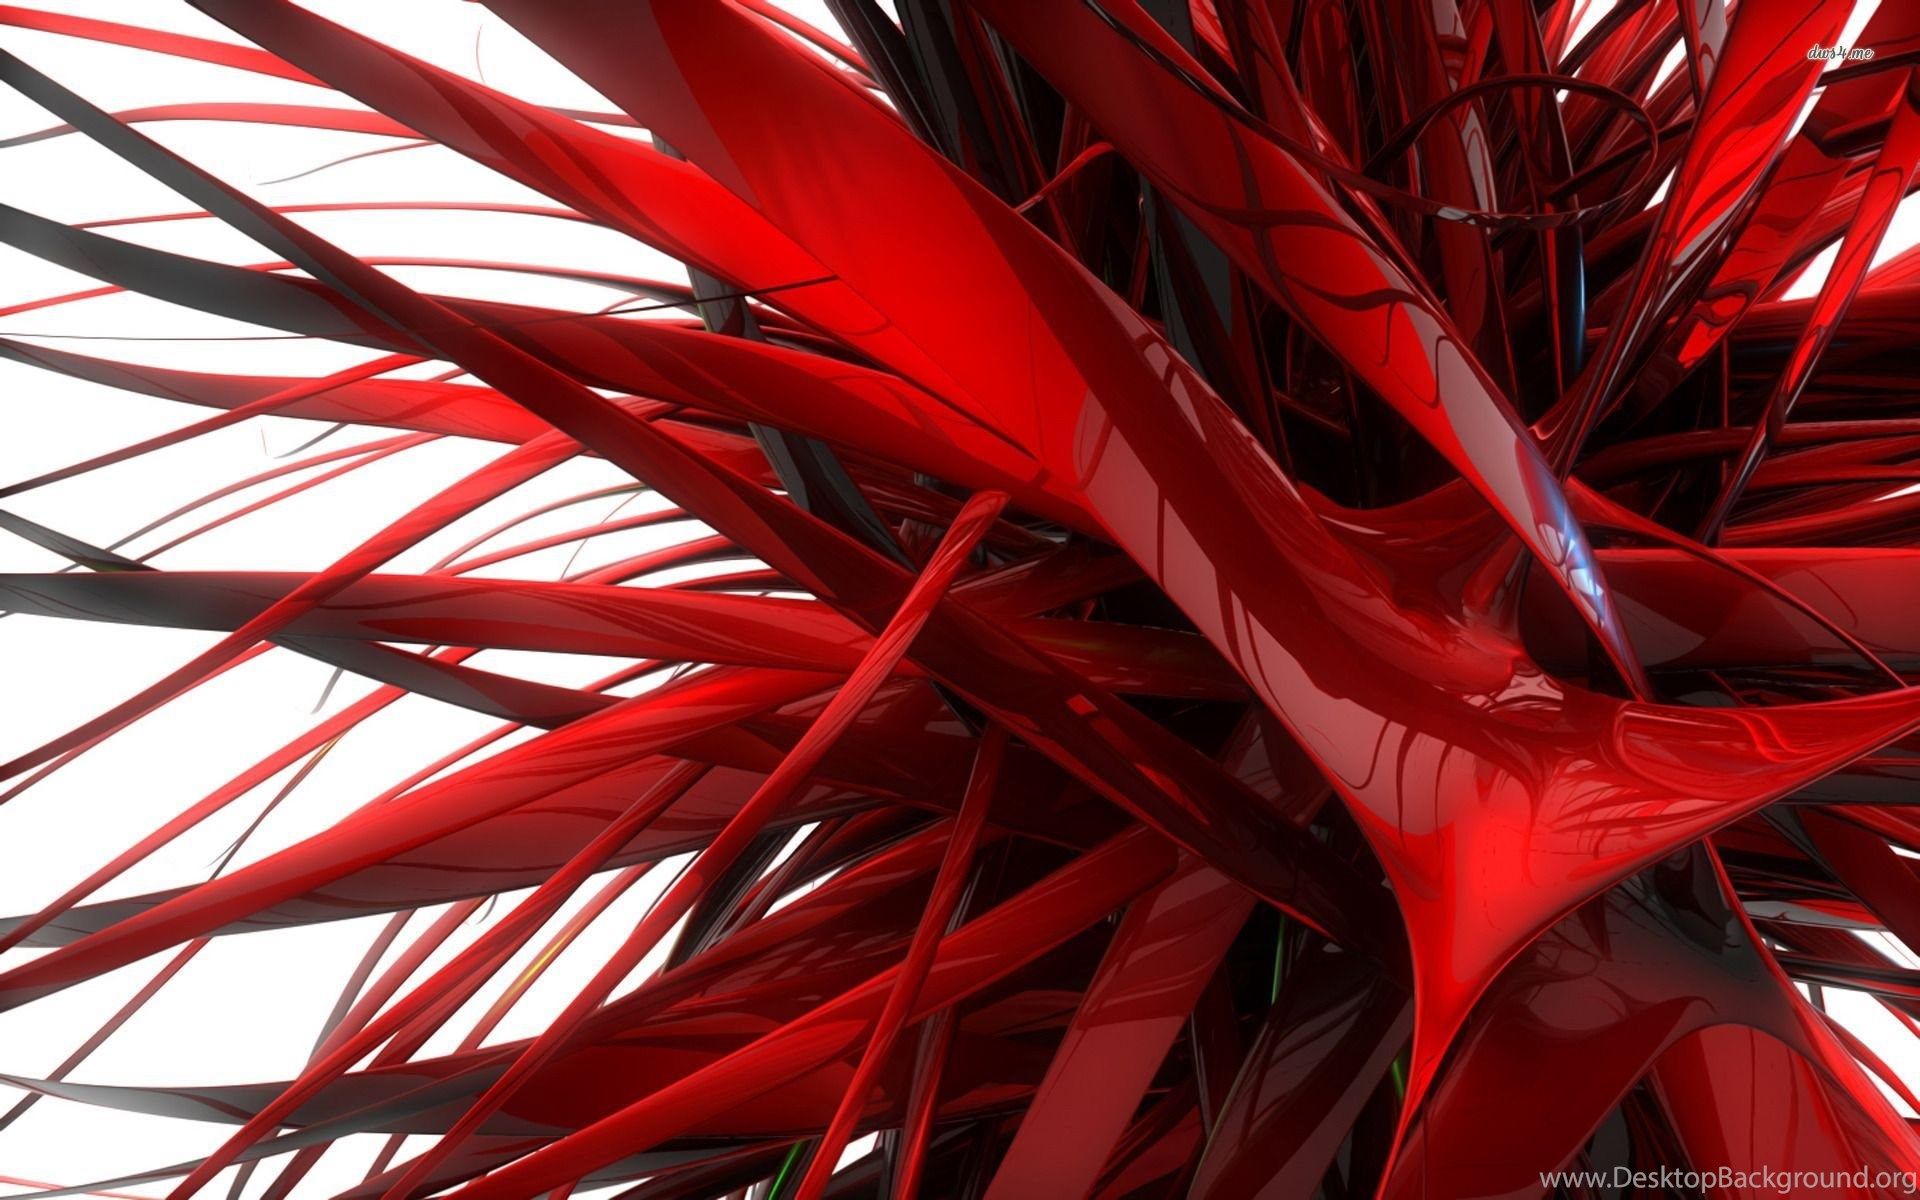 Red 3D Desktop Wallpaper, Red 3D Image, New Wallpaper Desktop Background